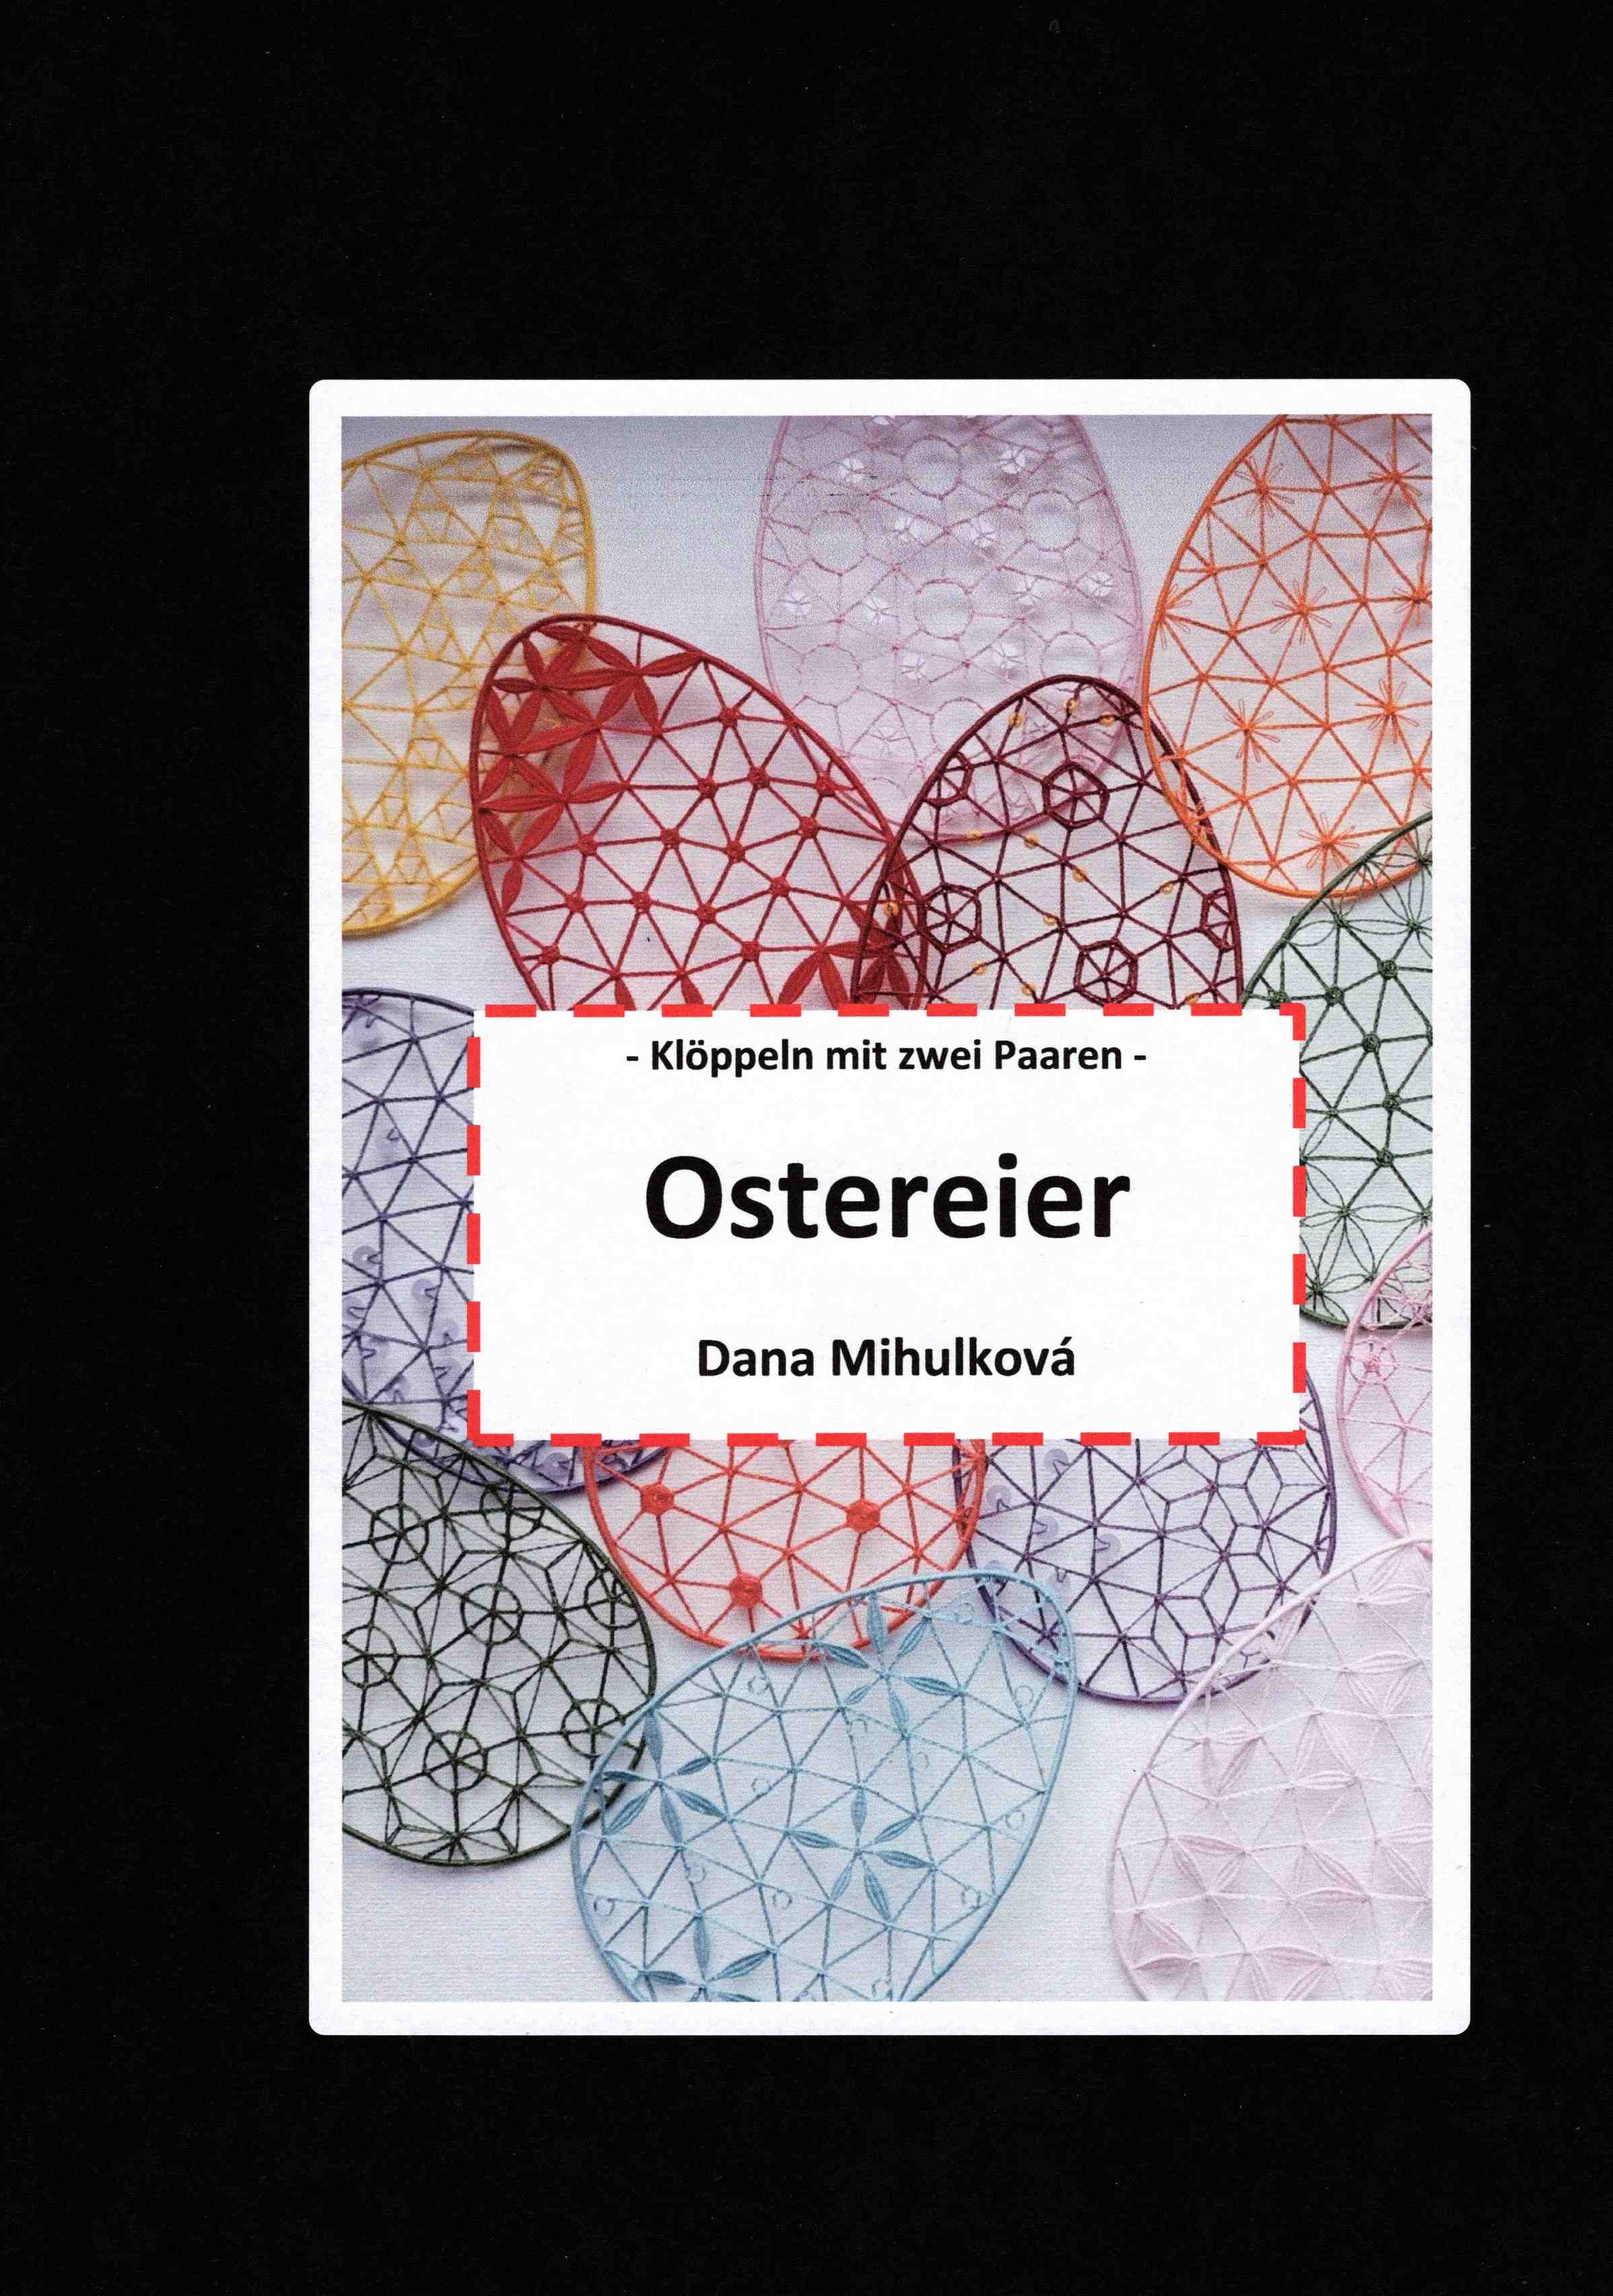 Ostereier by Dana Mihulkov